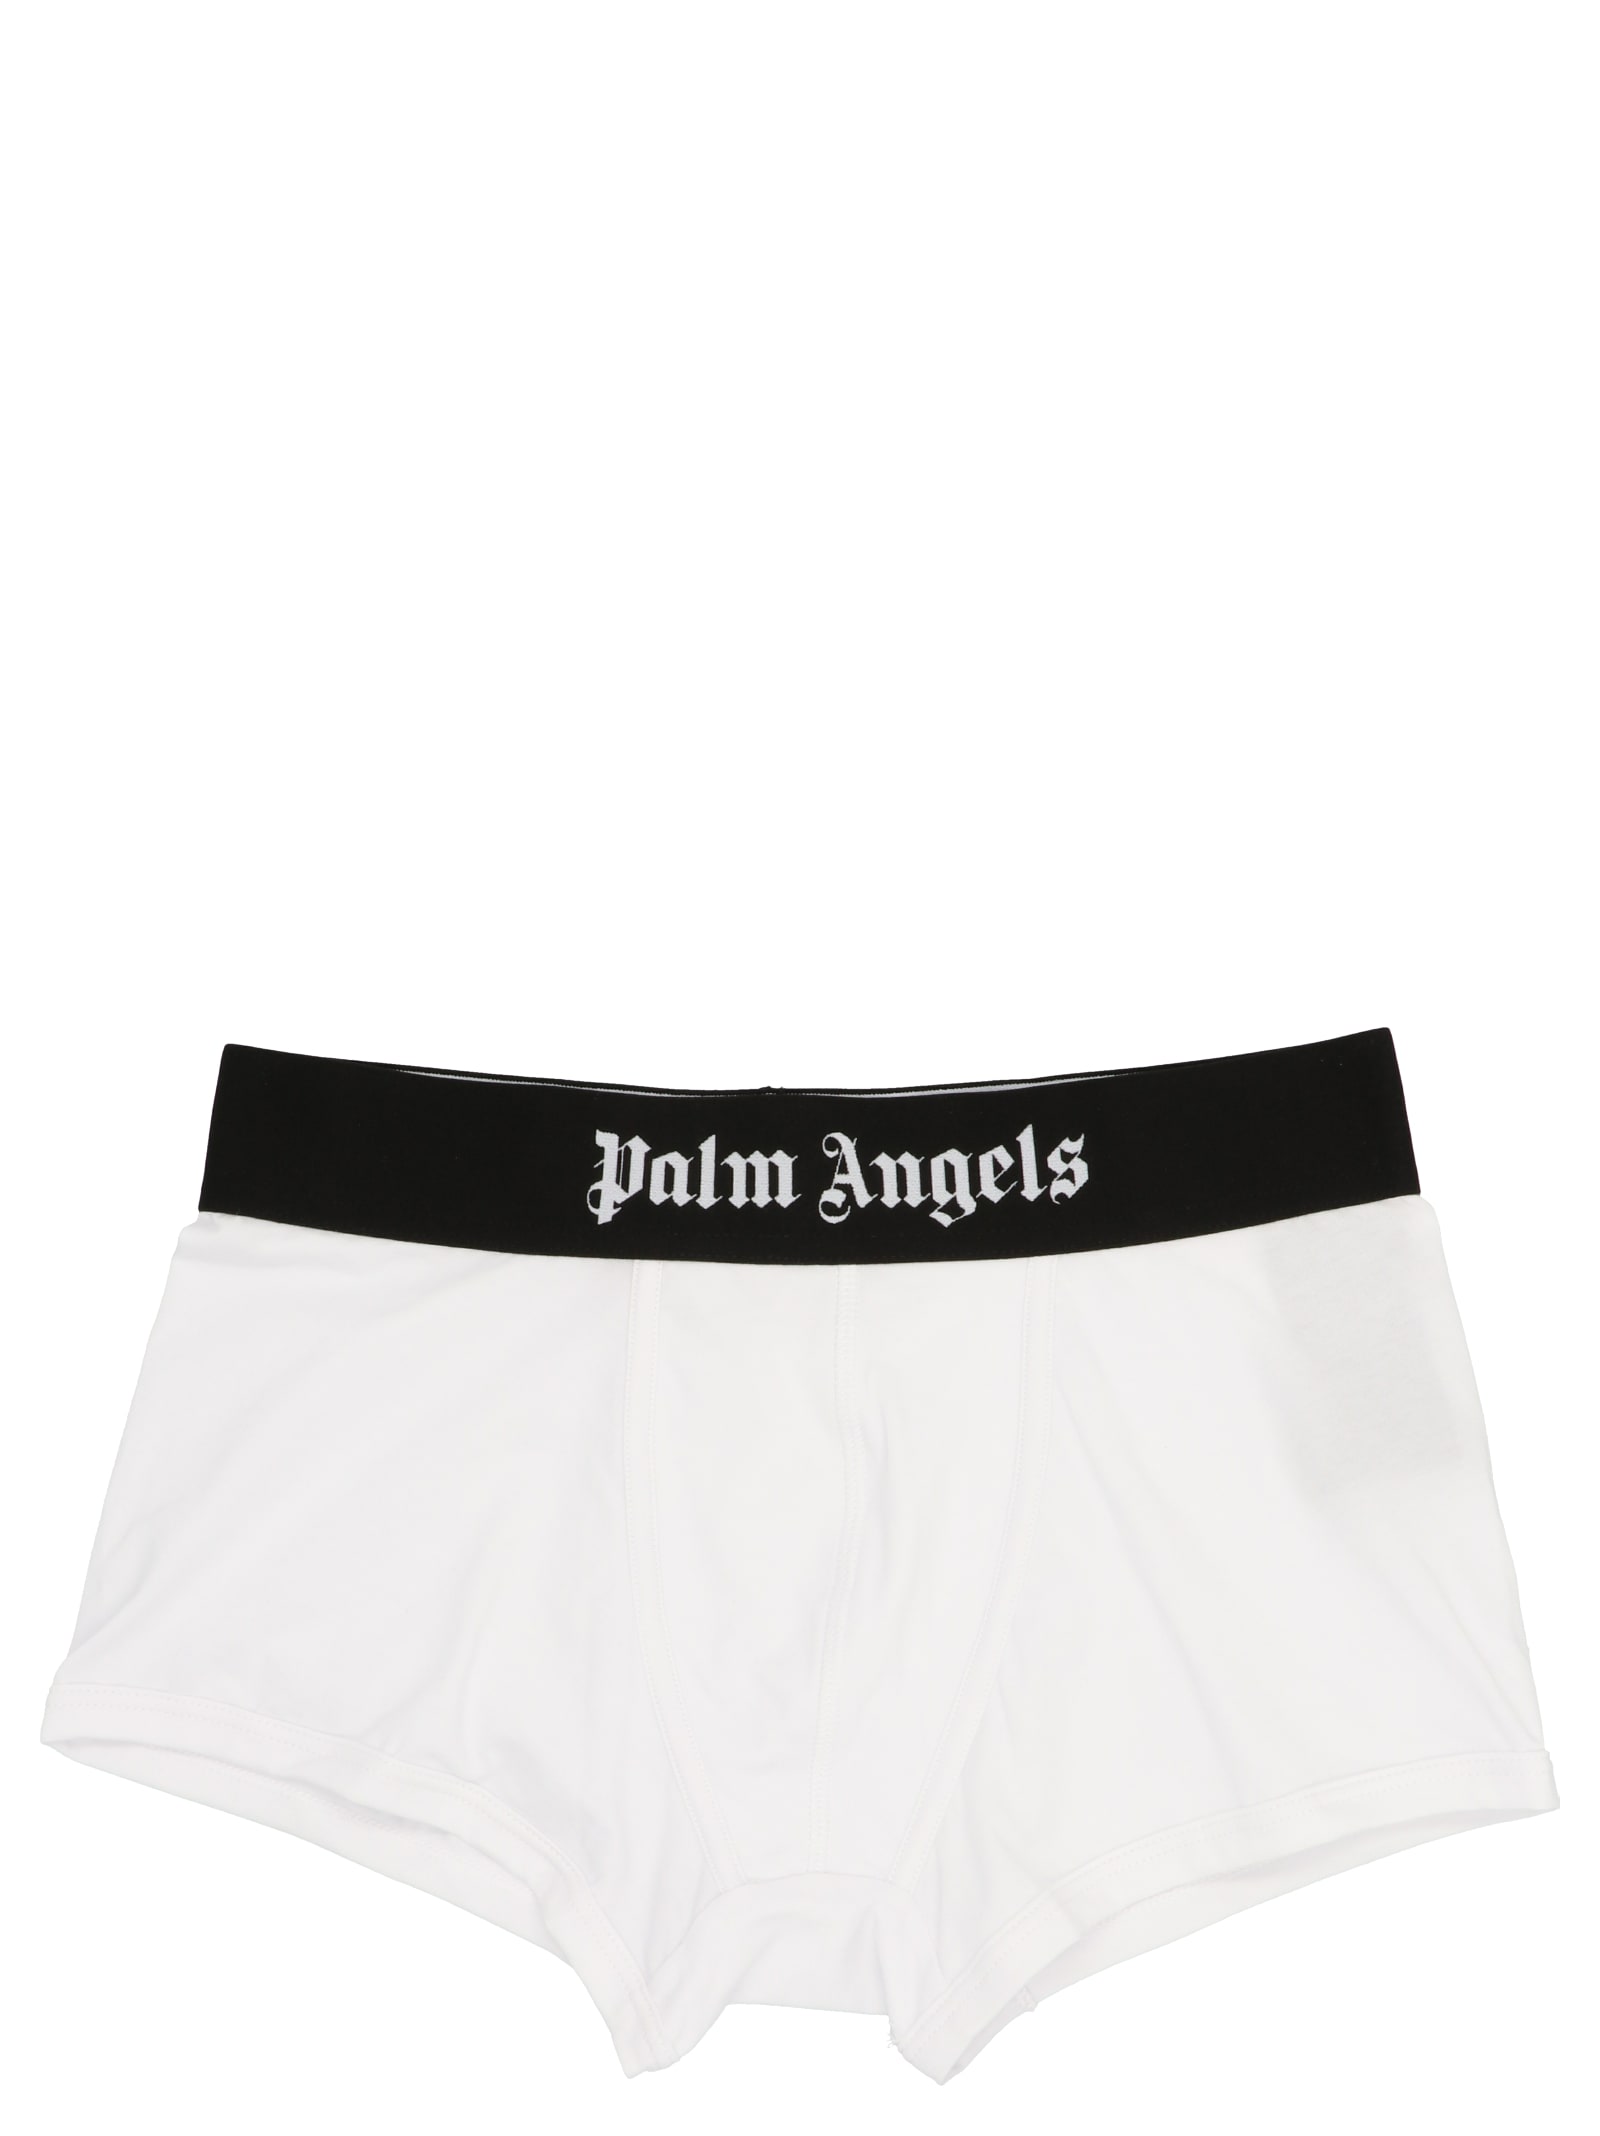 Palm Angels Logo Boxer Shorts